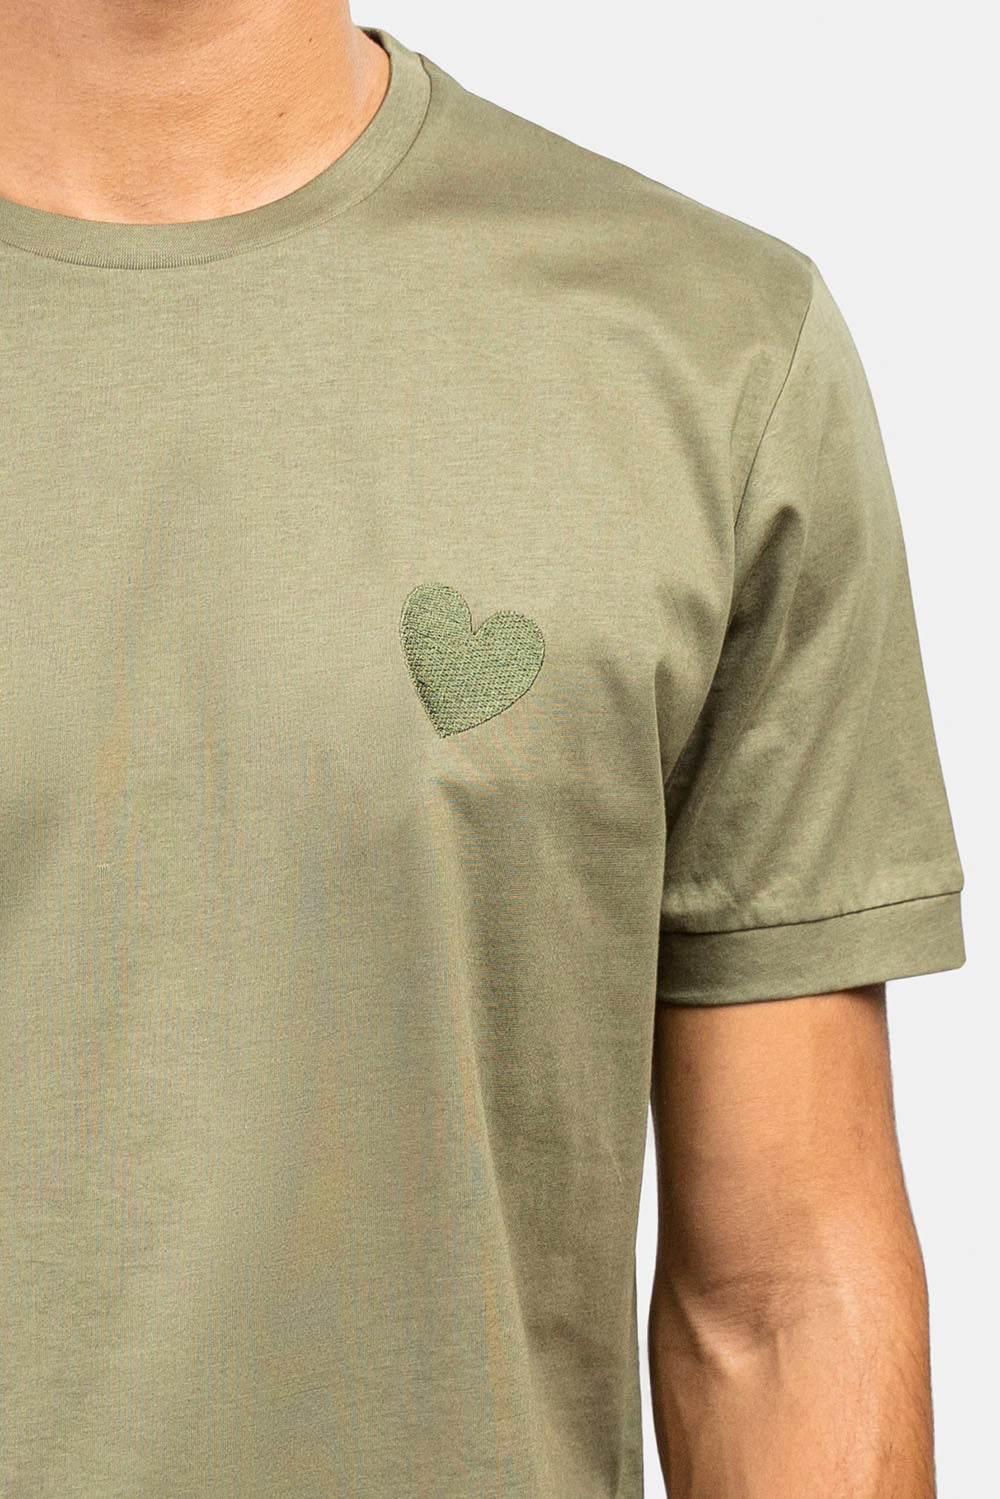 Inimigo Pocket Flower Monogram Comfort Green T-Shirt